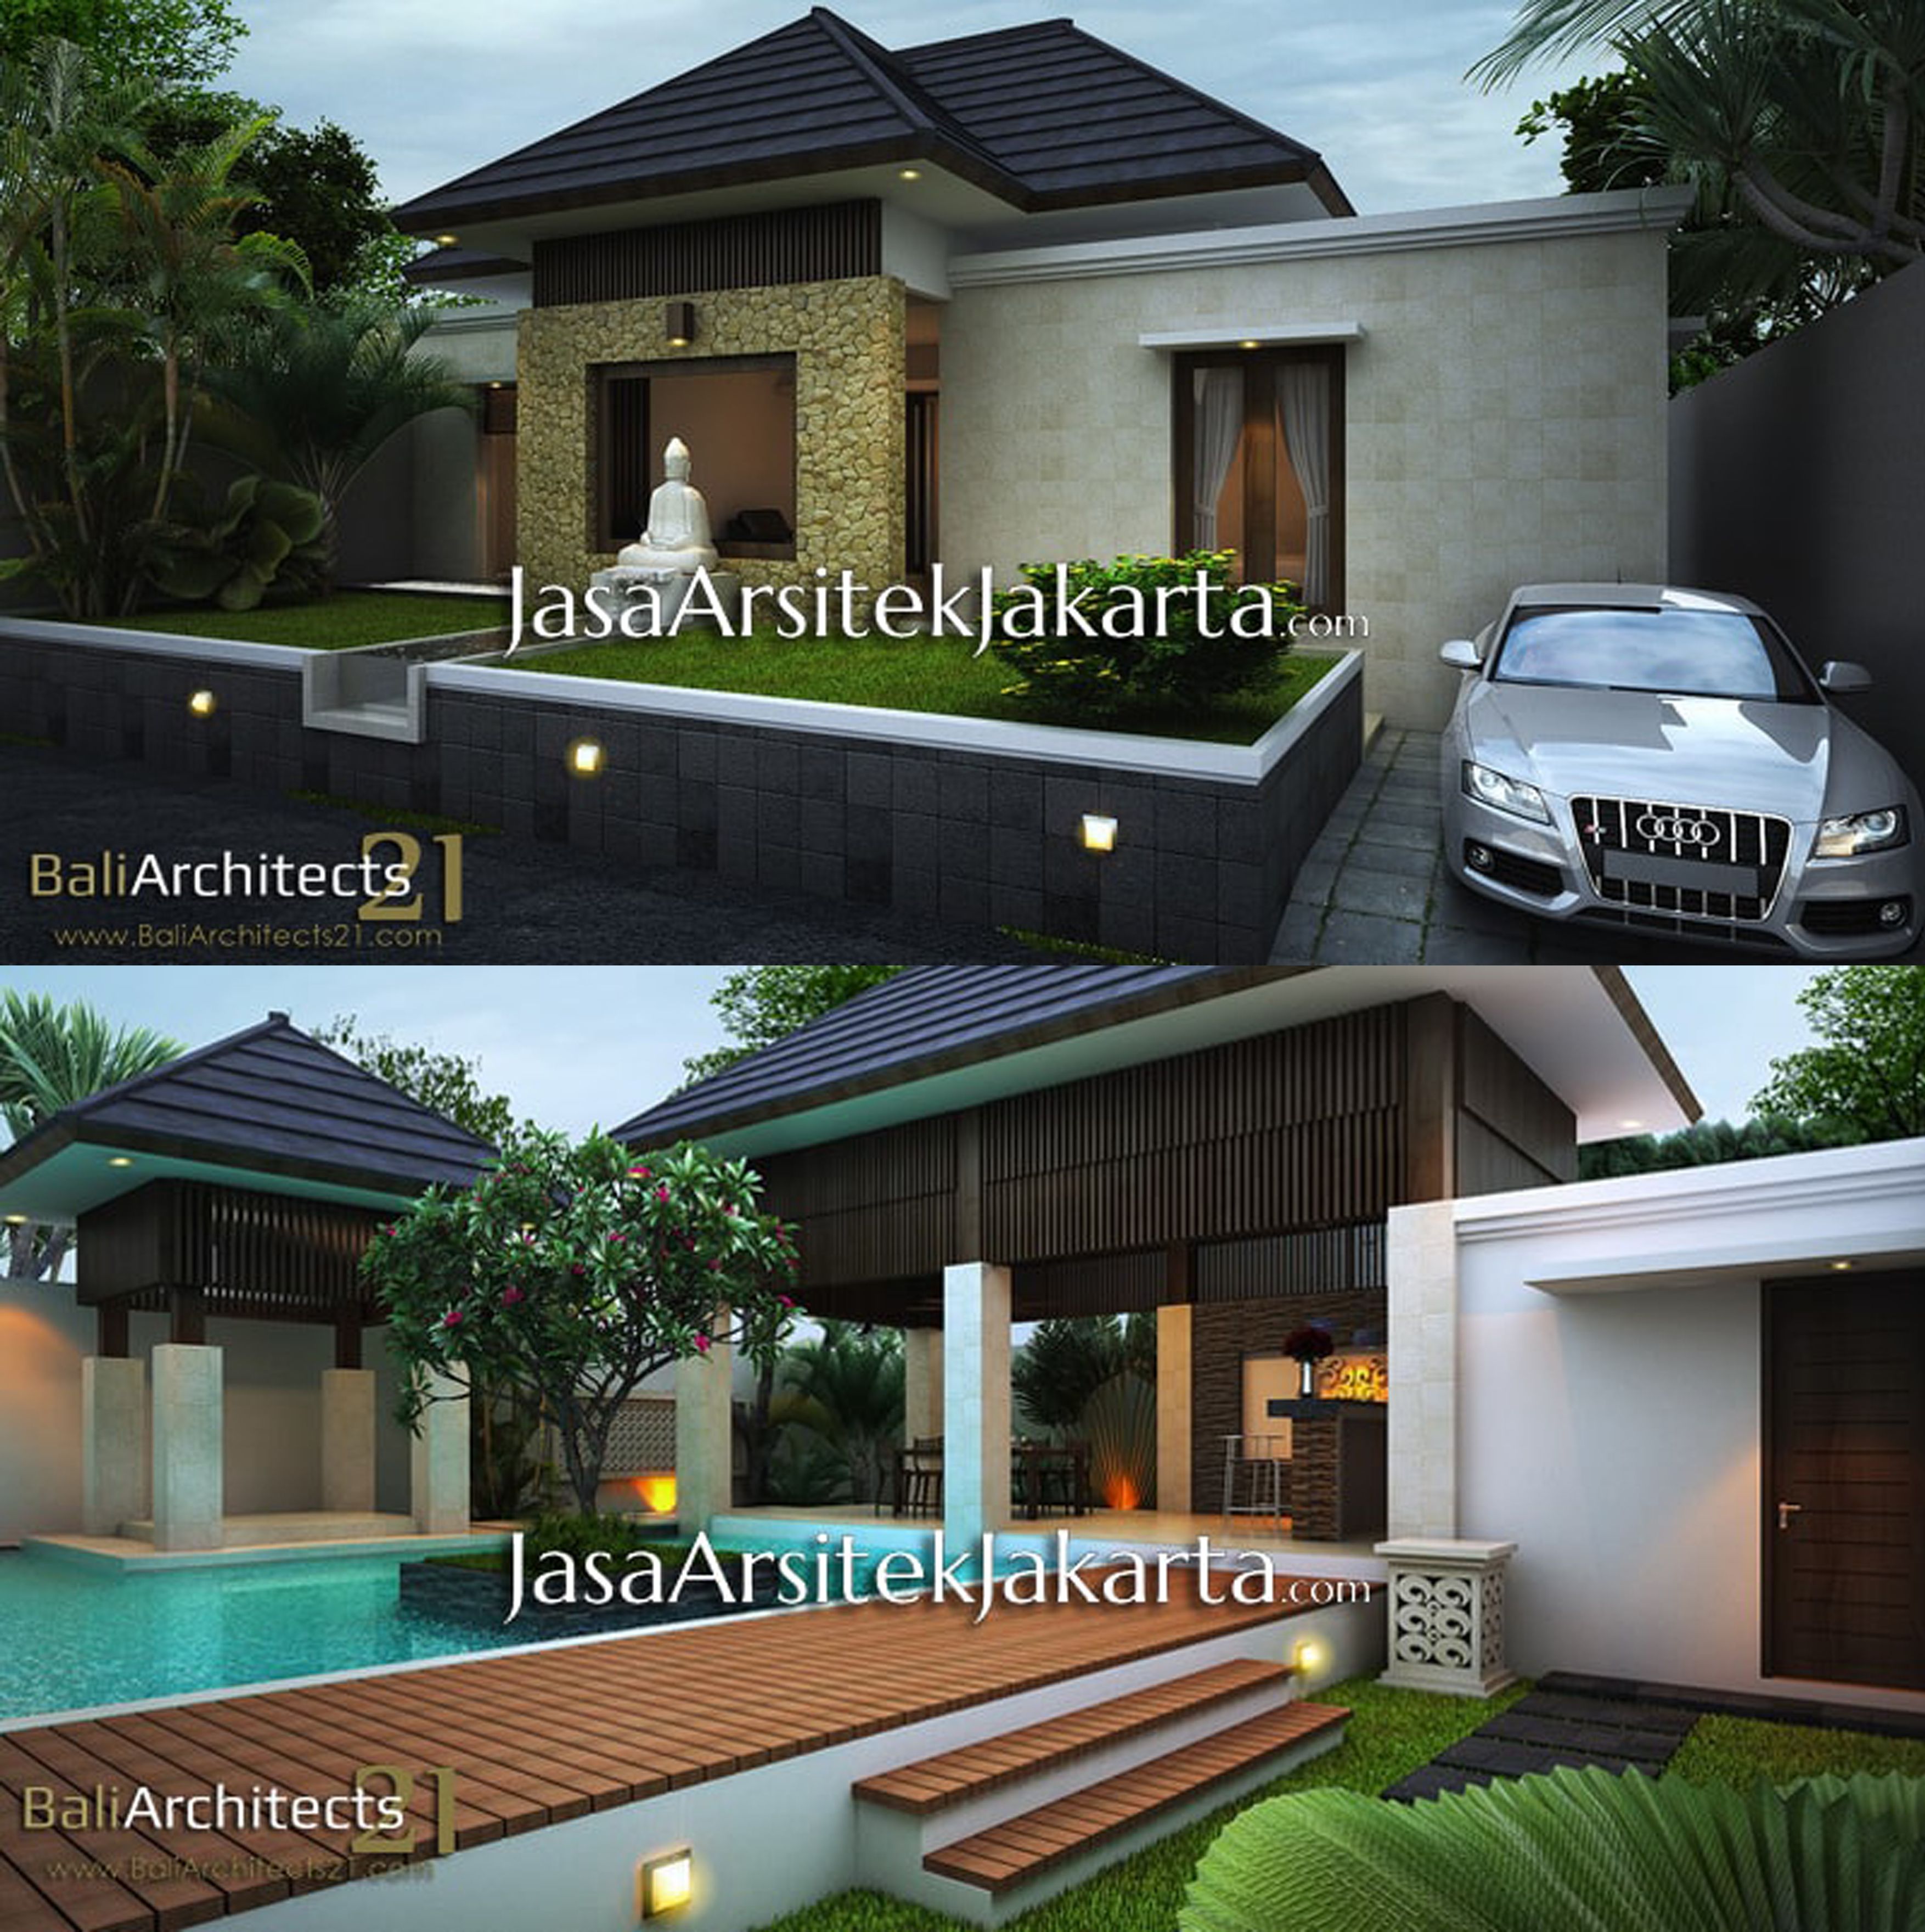 41 Gambar Rumah Minimalis Modern Gaya Bali Terbaru 2020